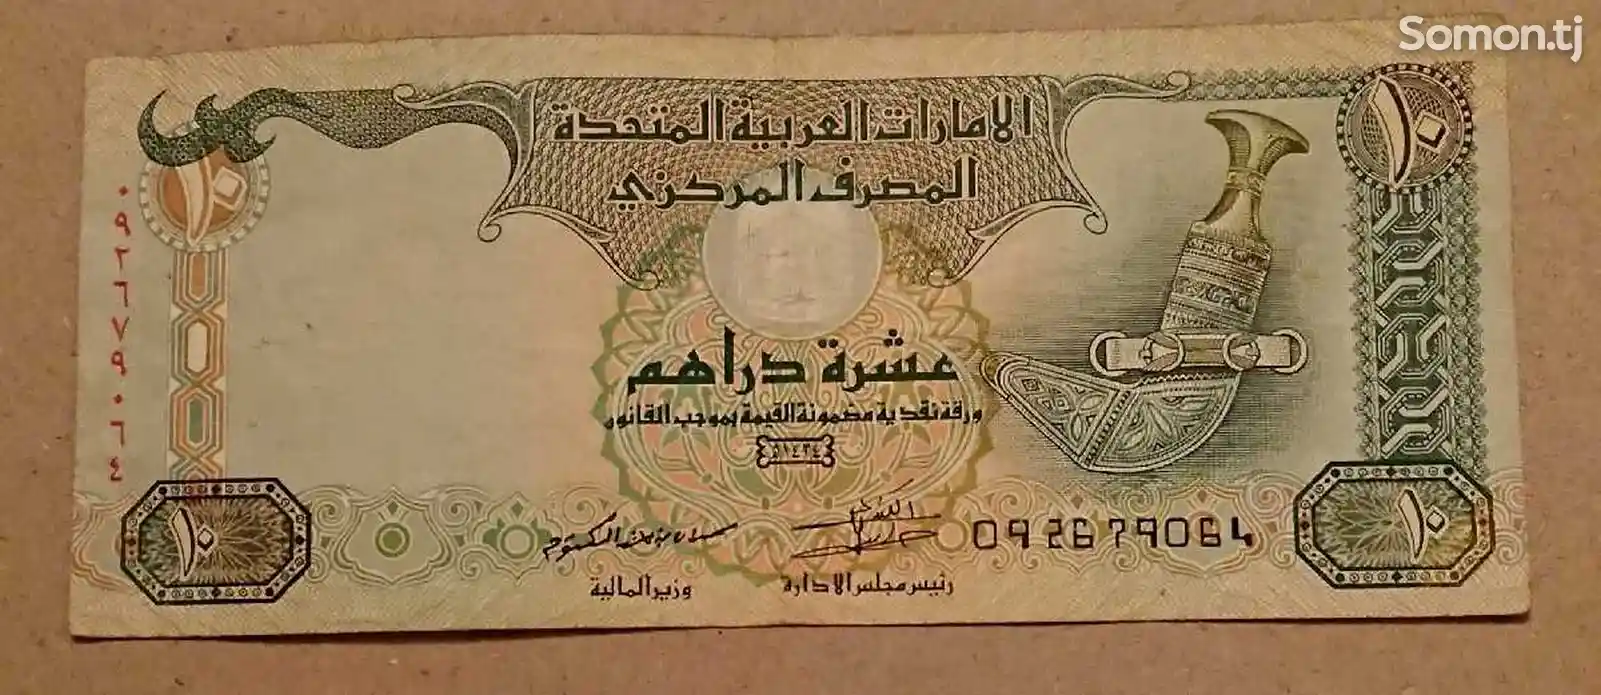 Банкнота ОАЭ-1